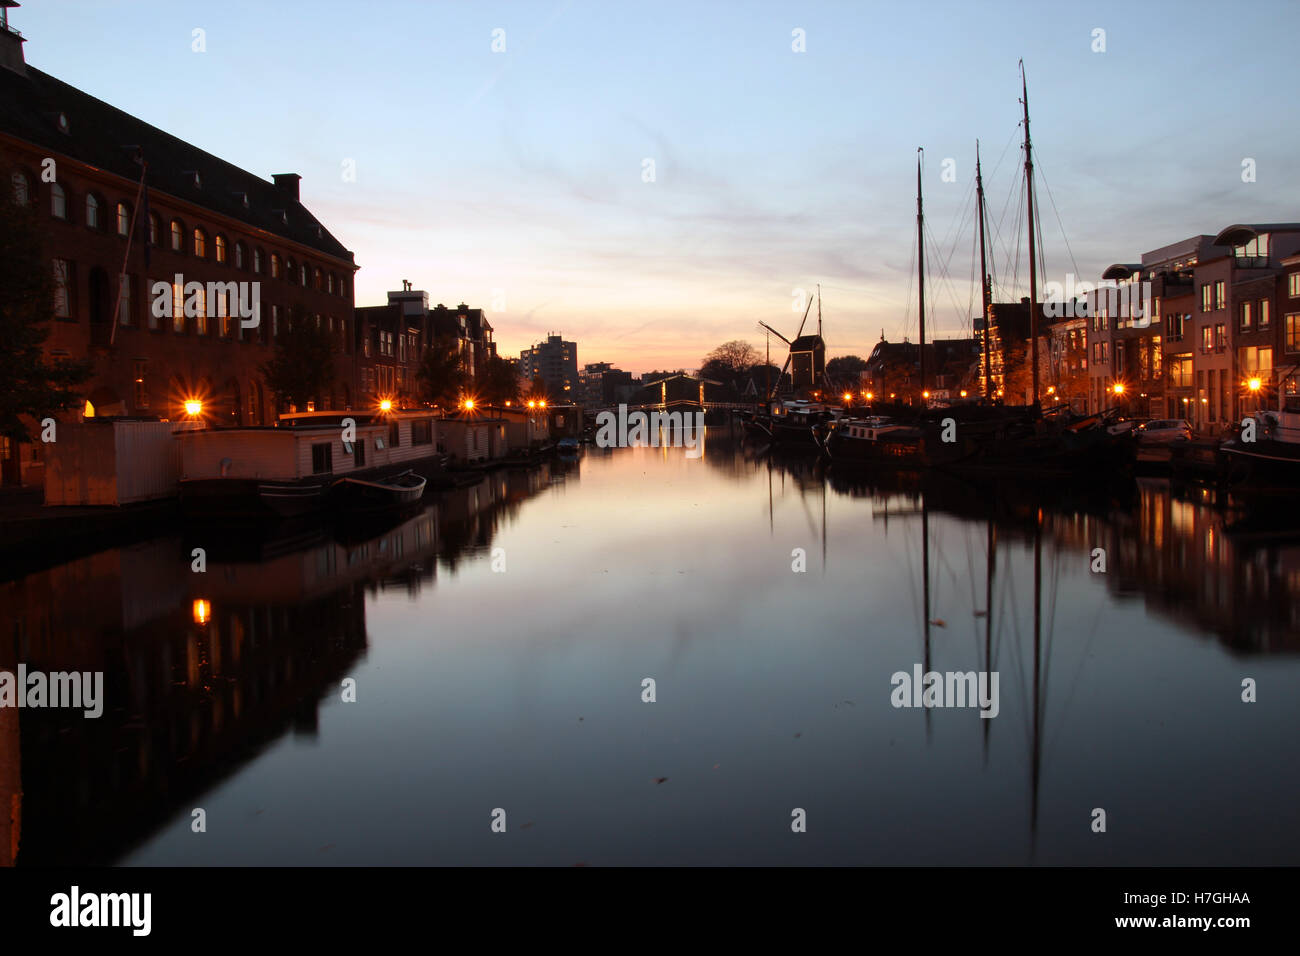 Old Fishing Boats, Galgewater Bridge, Canal, Houses, Leiden, Netherlands Stock Photo